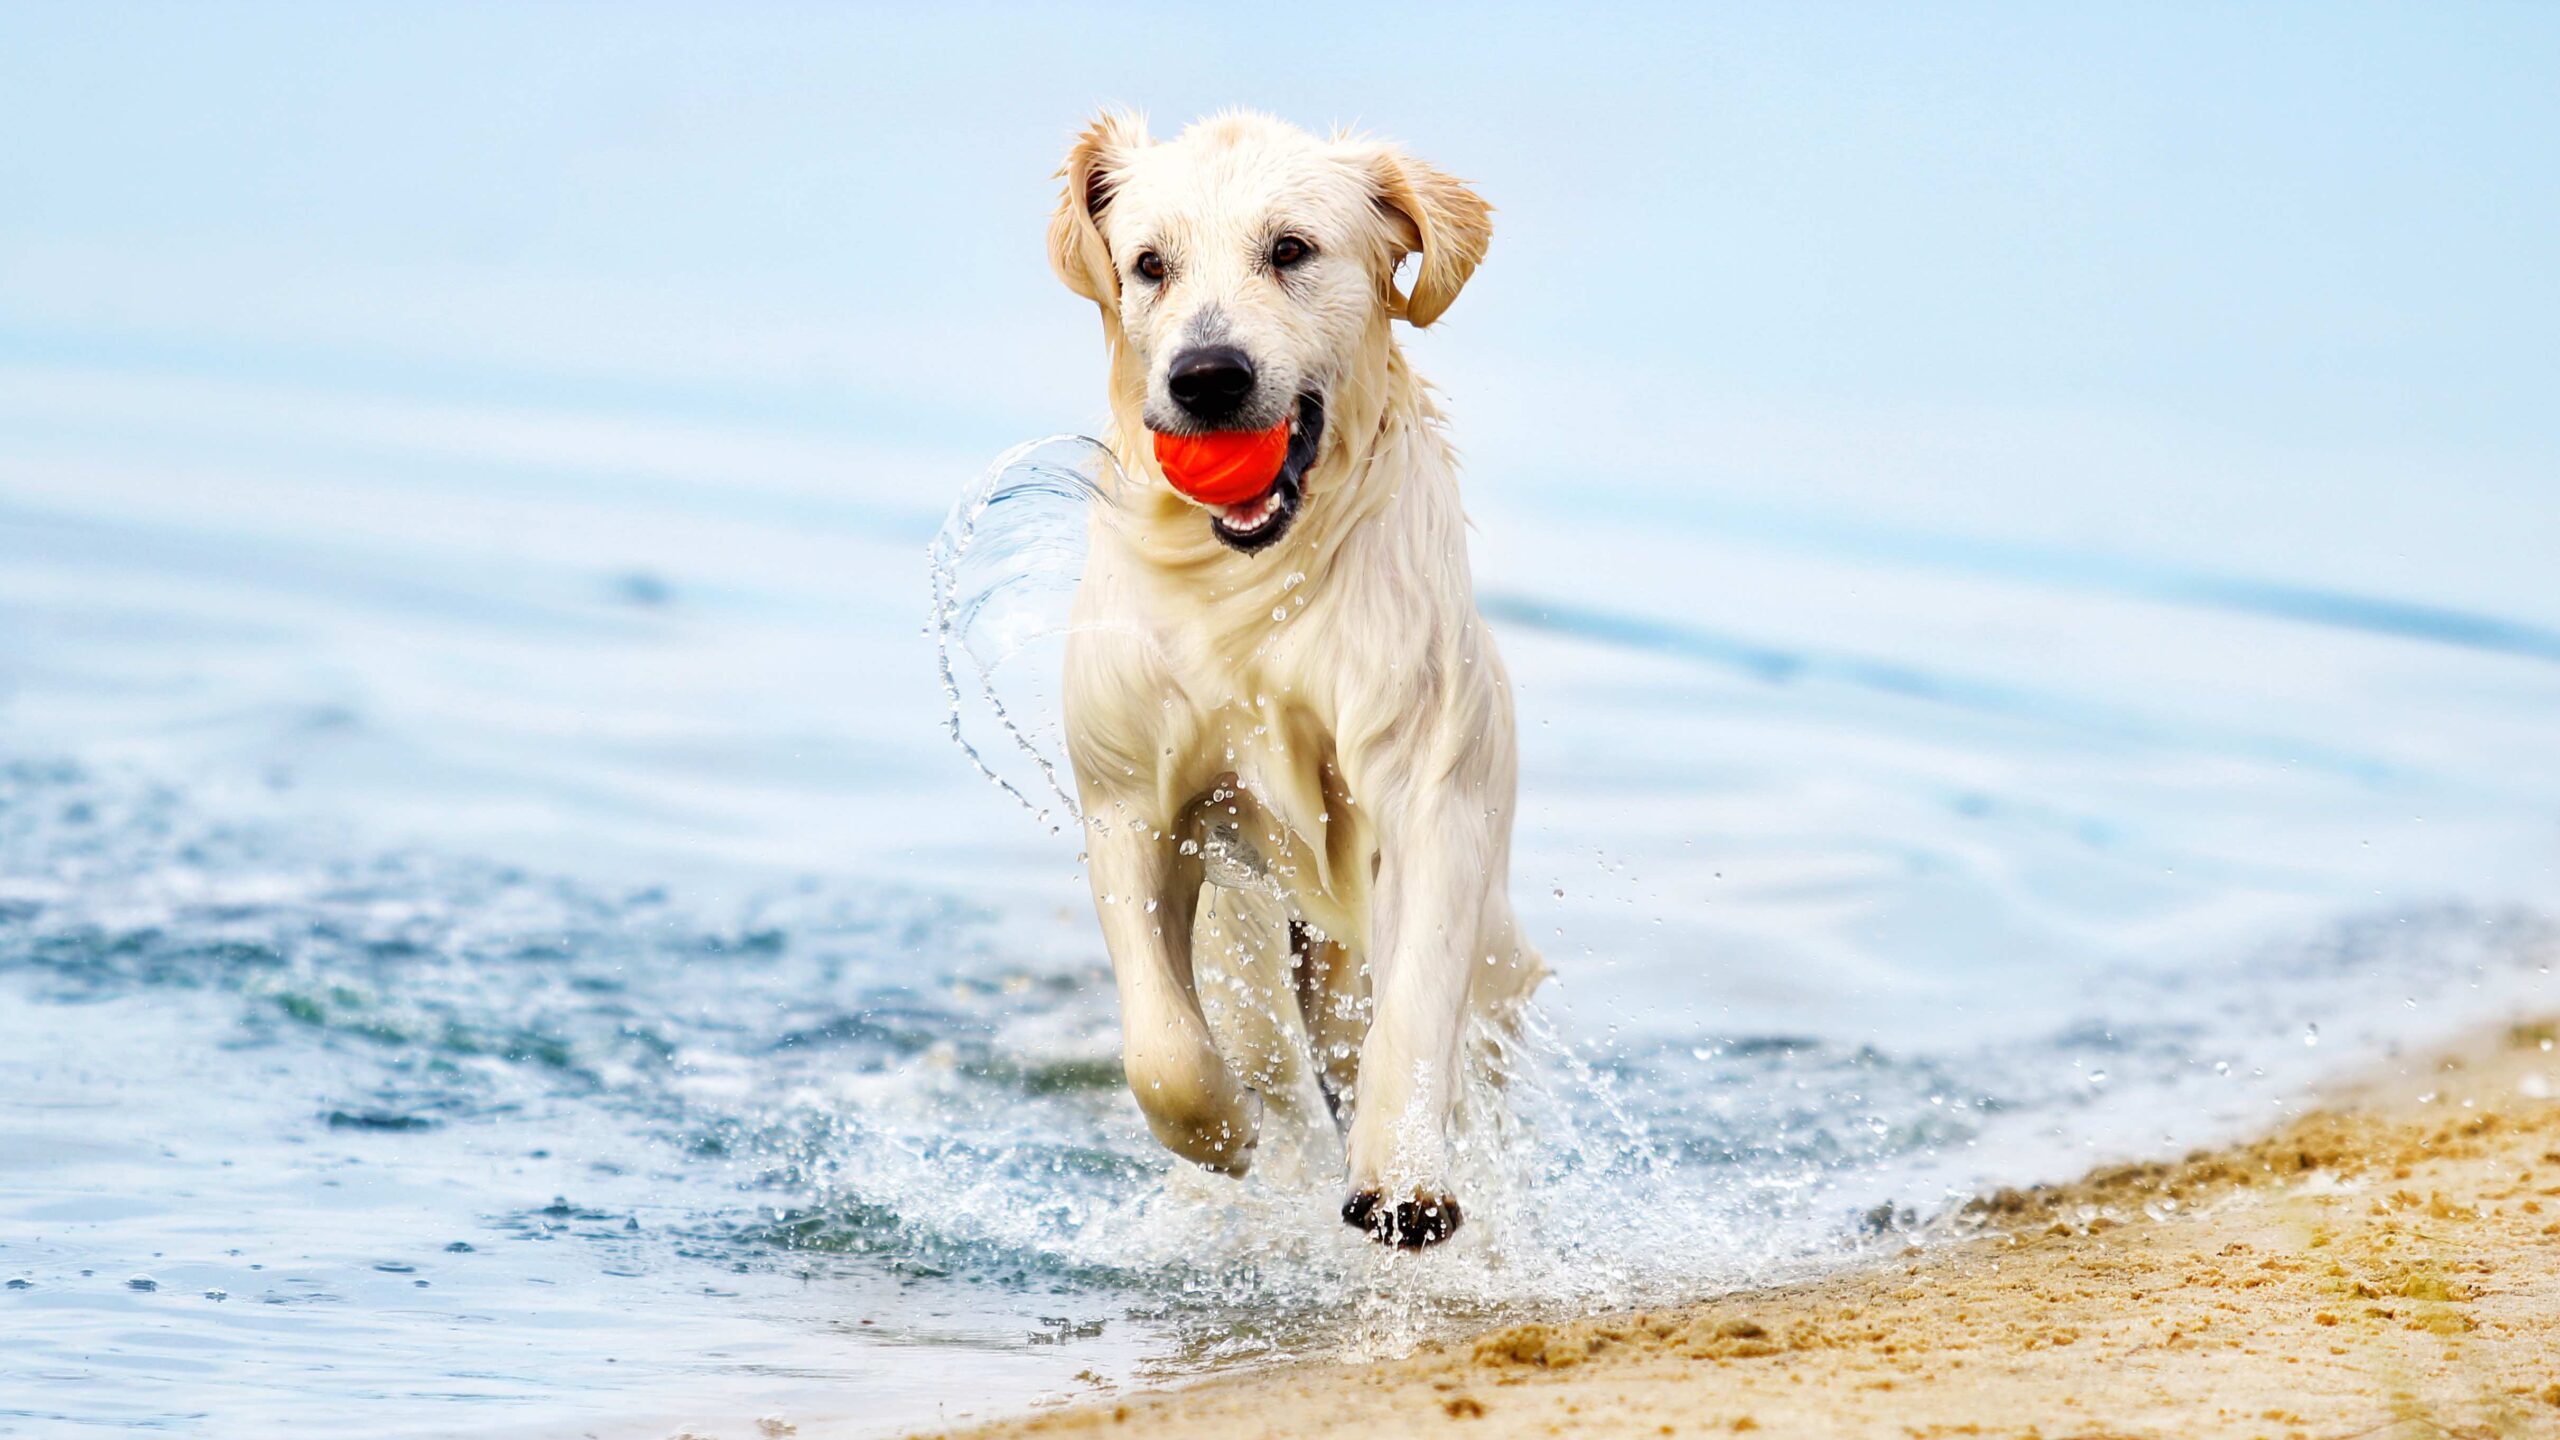 dog runs along the beach in a spray of water